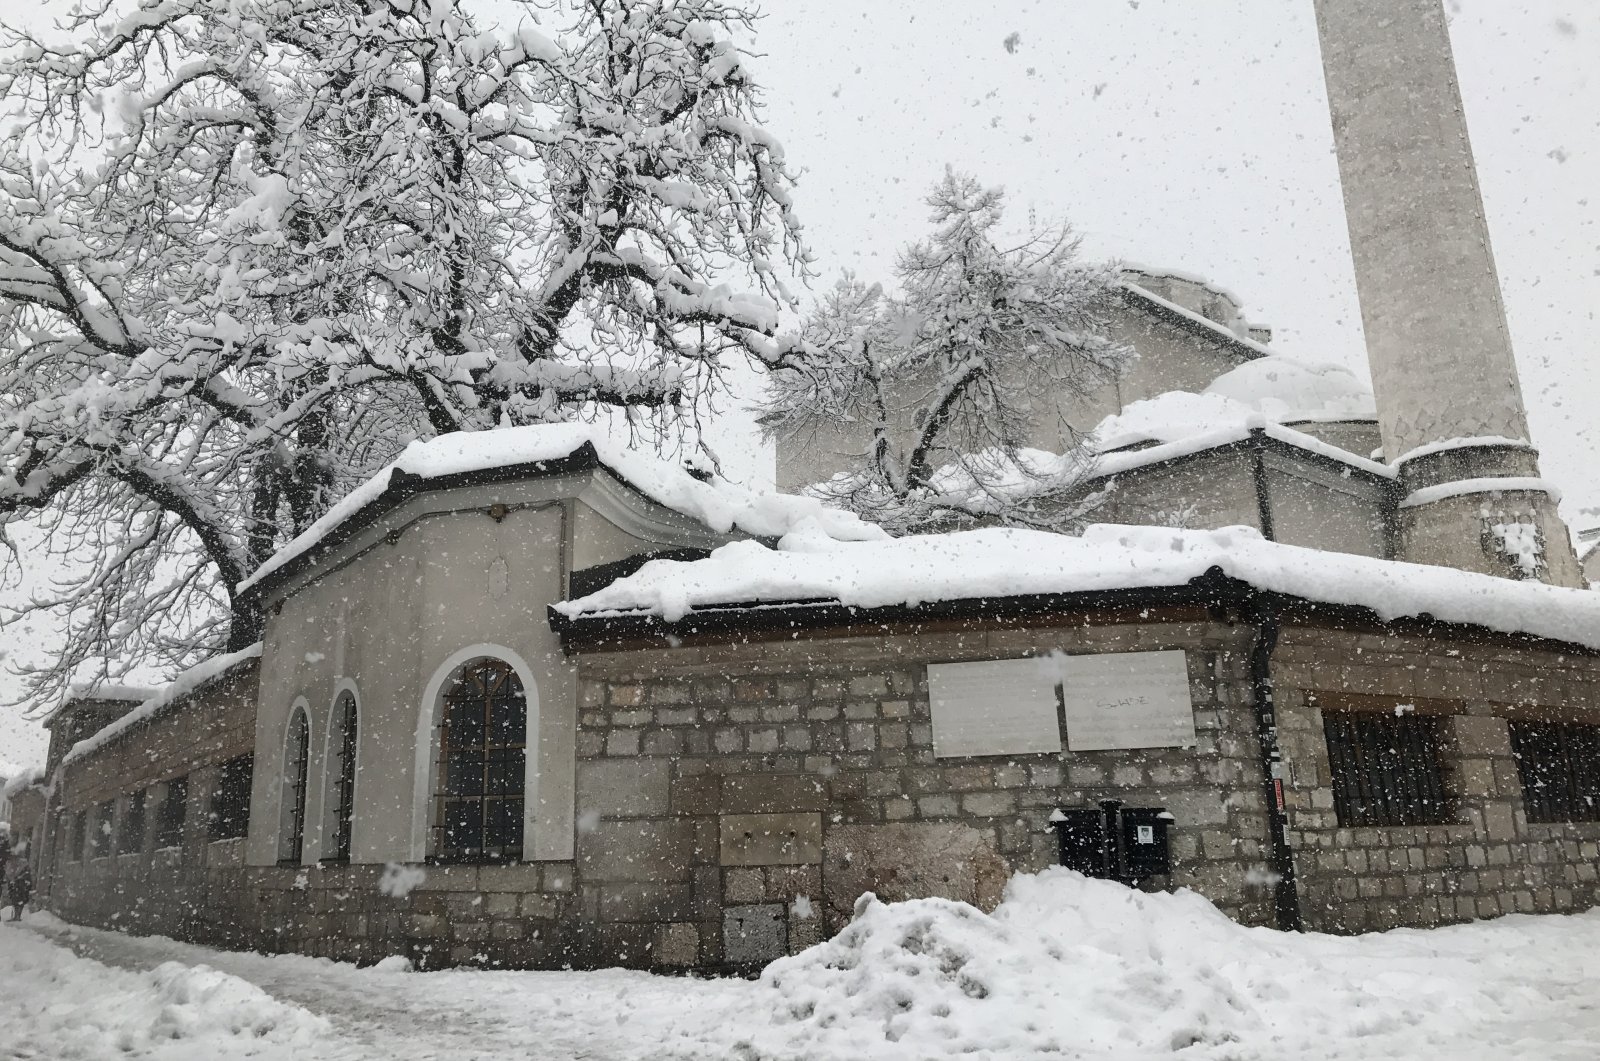 The Gazi Husrev-beg Mosque in Bascarsija, in Sarajevo, Bosnia-Herzegovina. (Photo by Özge Şengelen)